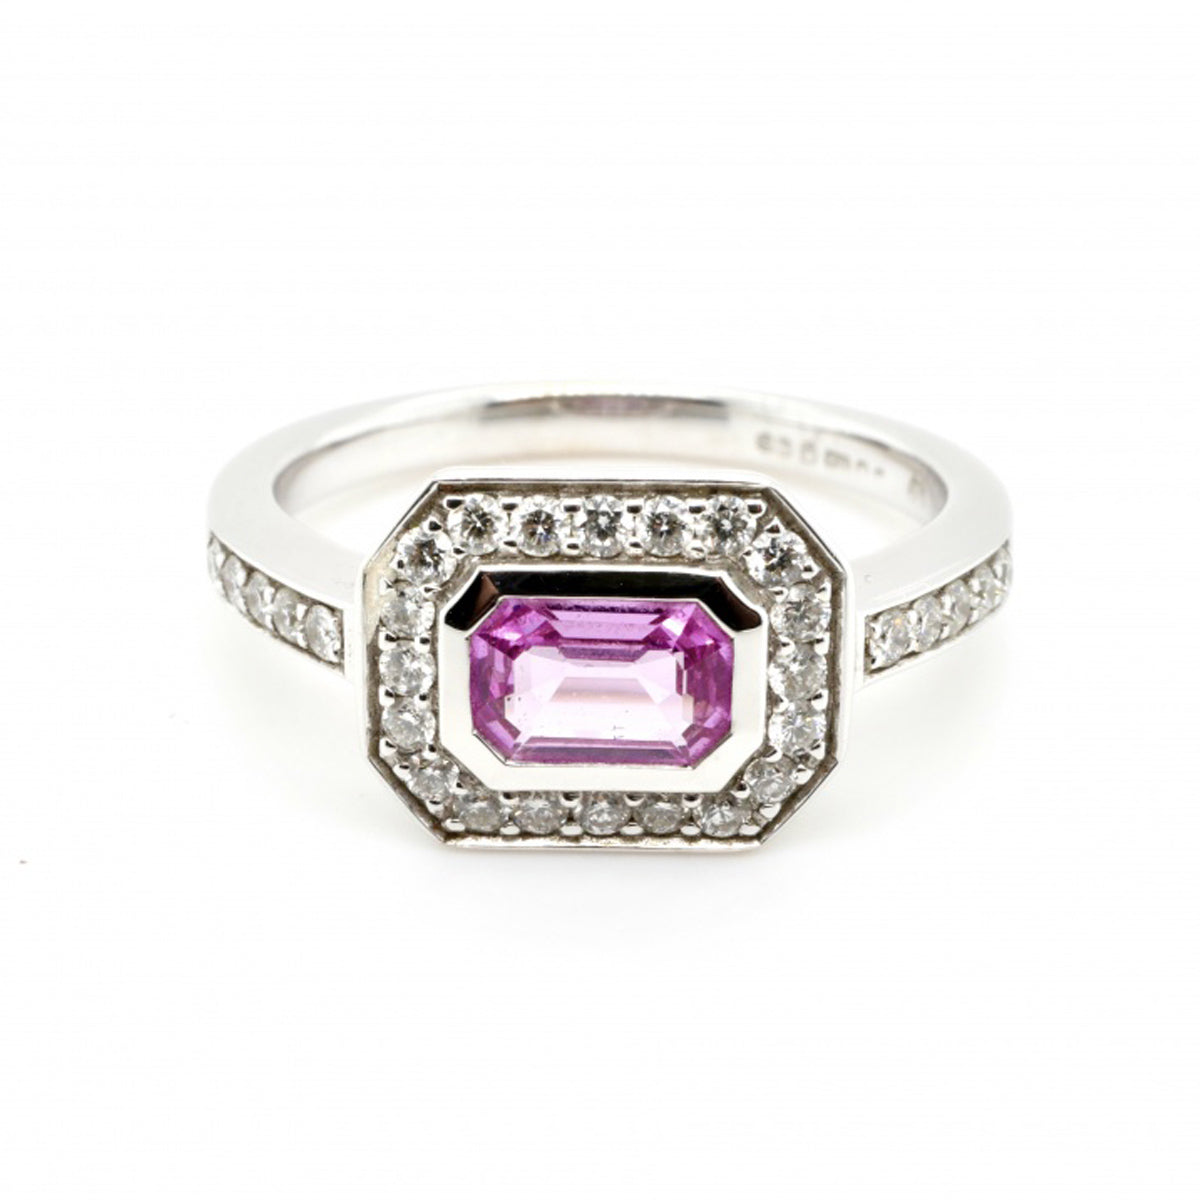 18ct White Gold Pink Sapphire & Diamond Ring - Size M 1/2